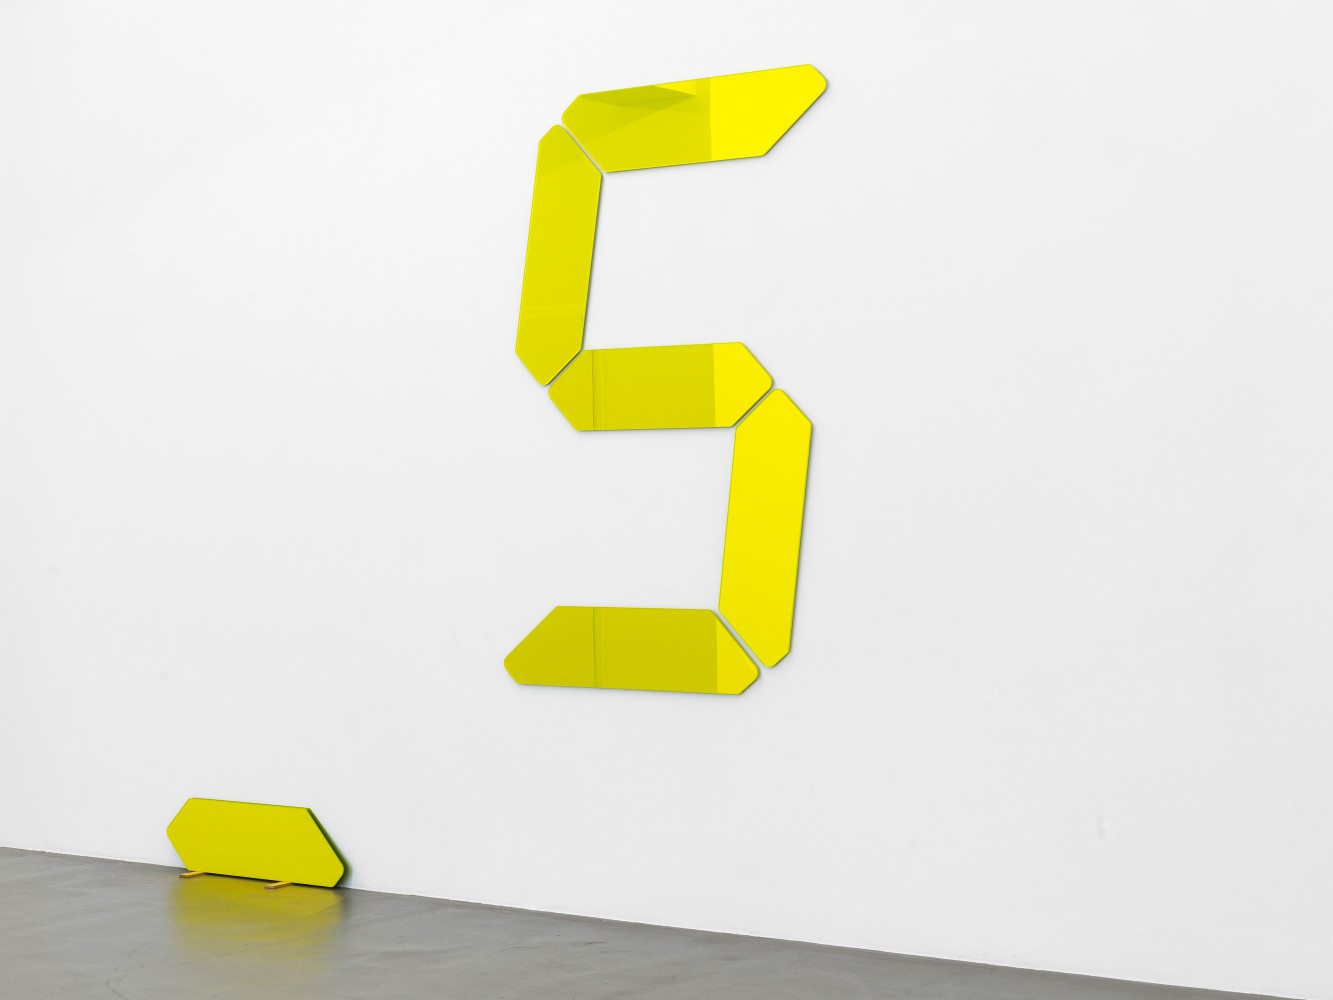 Tatsuo Miyajima, ‘Counter Object - 000’, 2020, Colored mirror